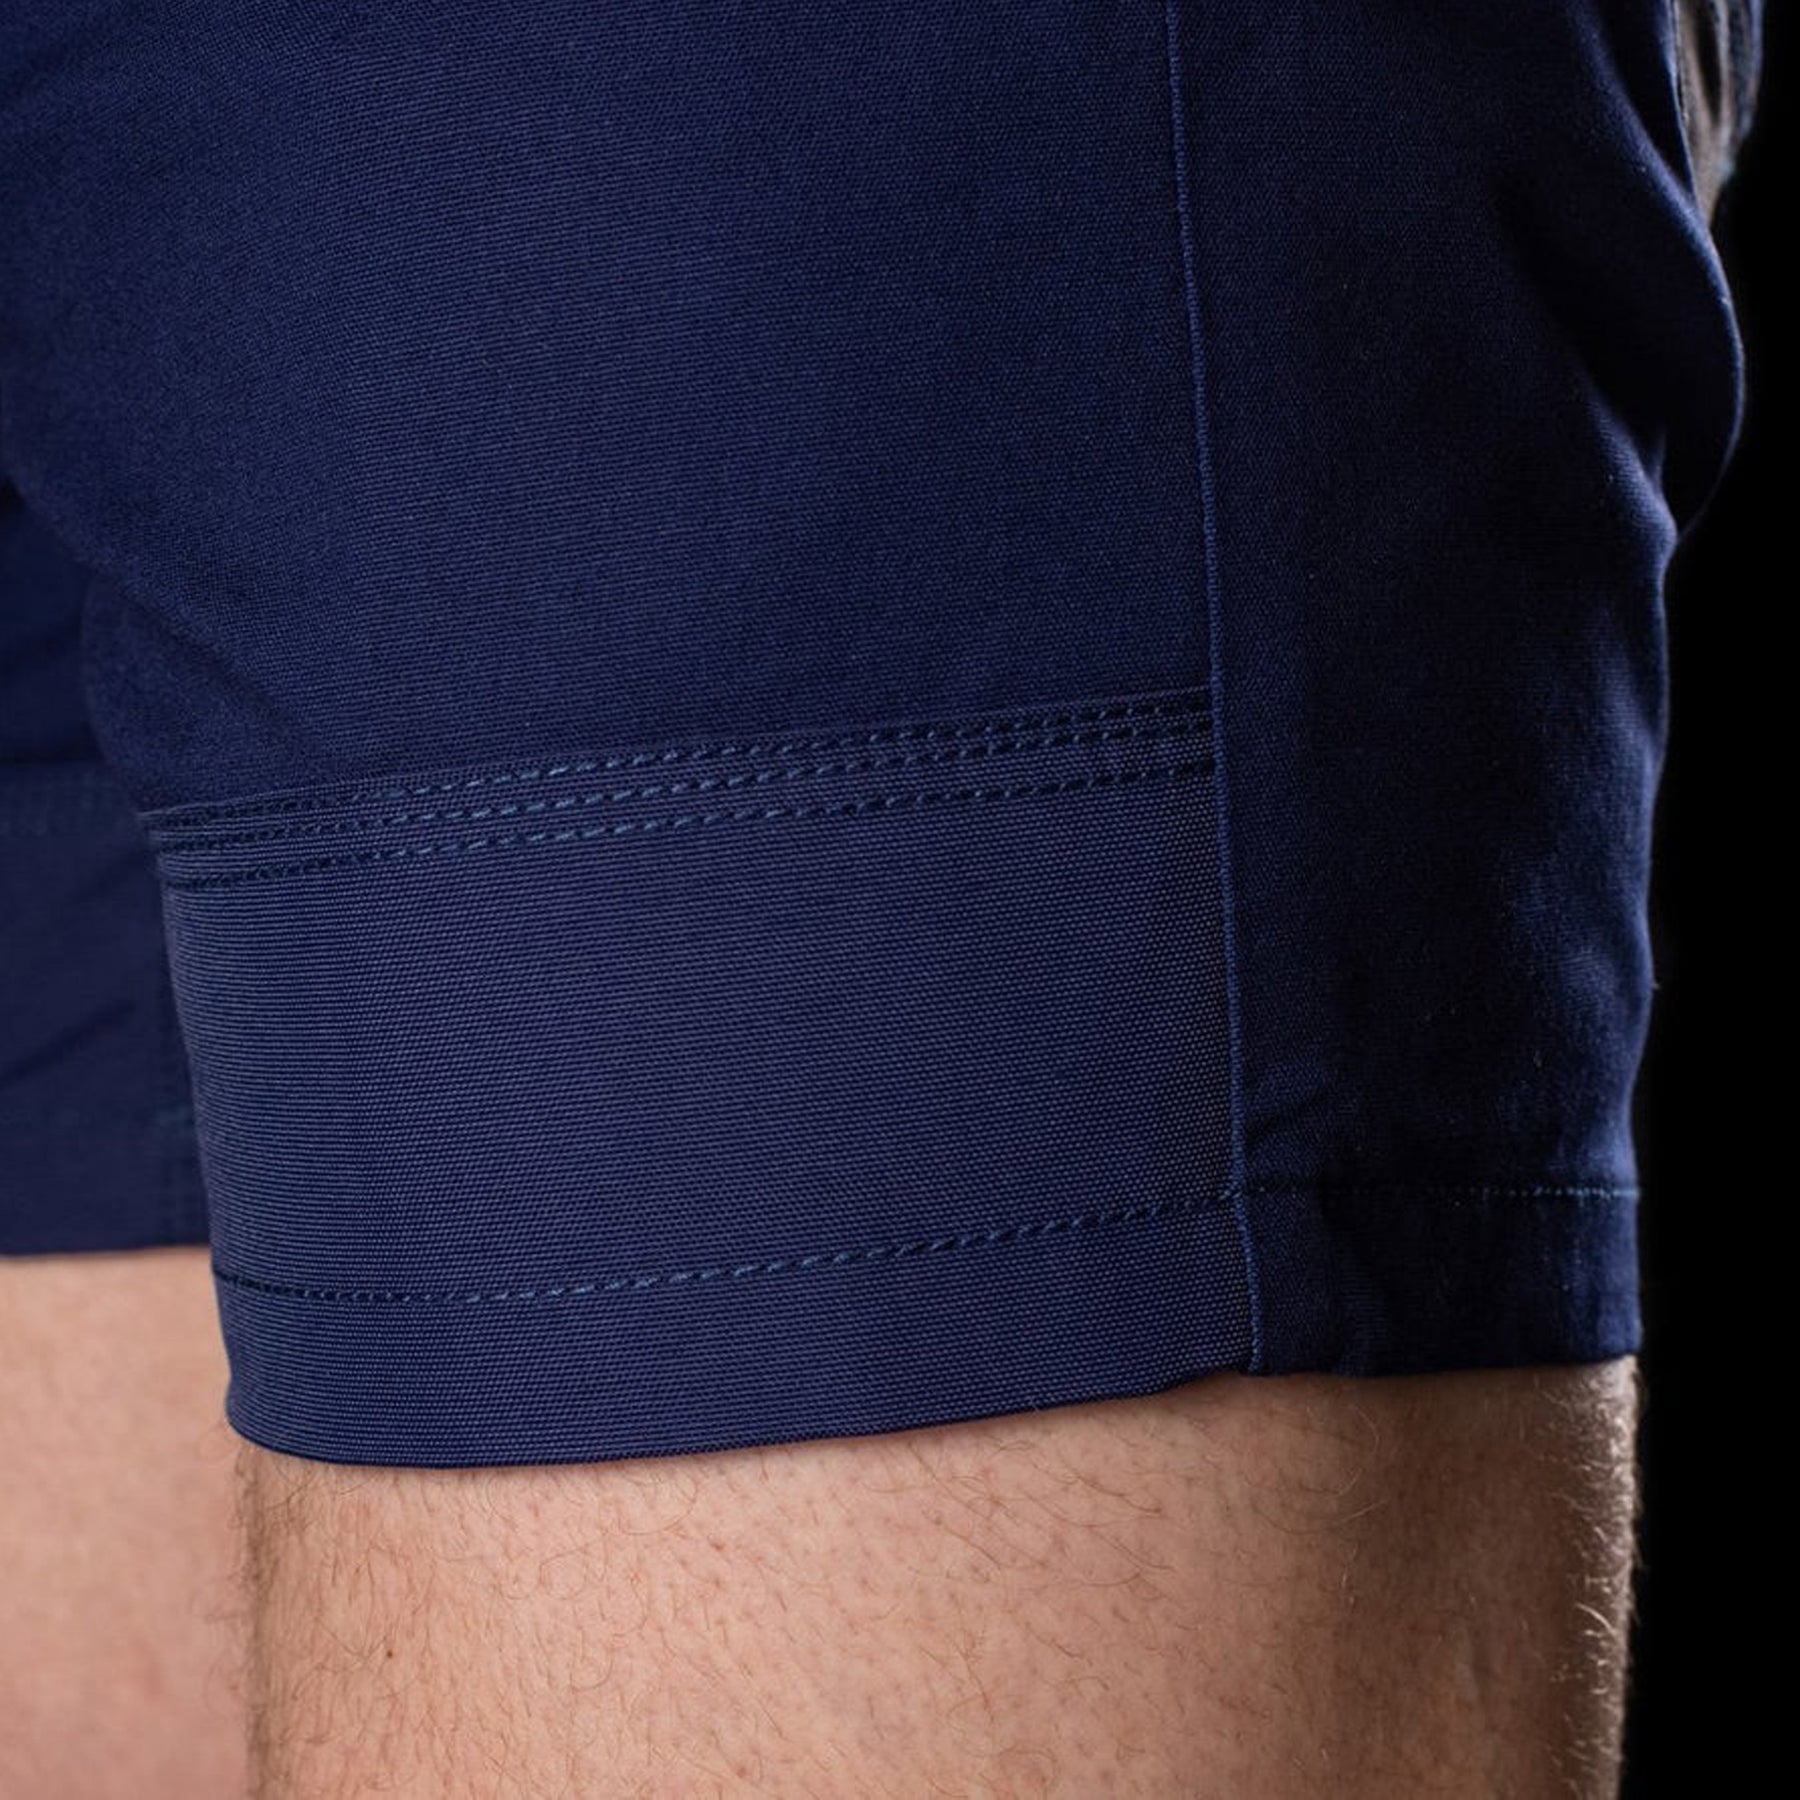 bad saviour pro elastic waist work short shorts in navy